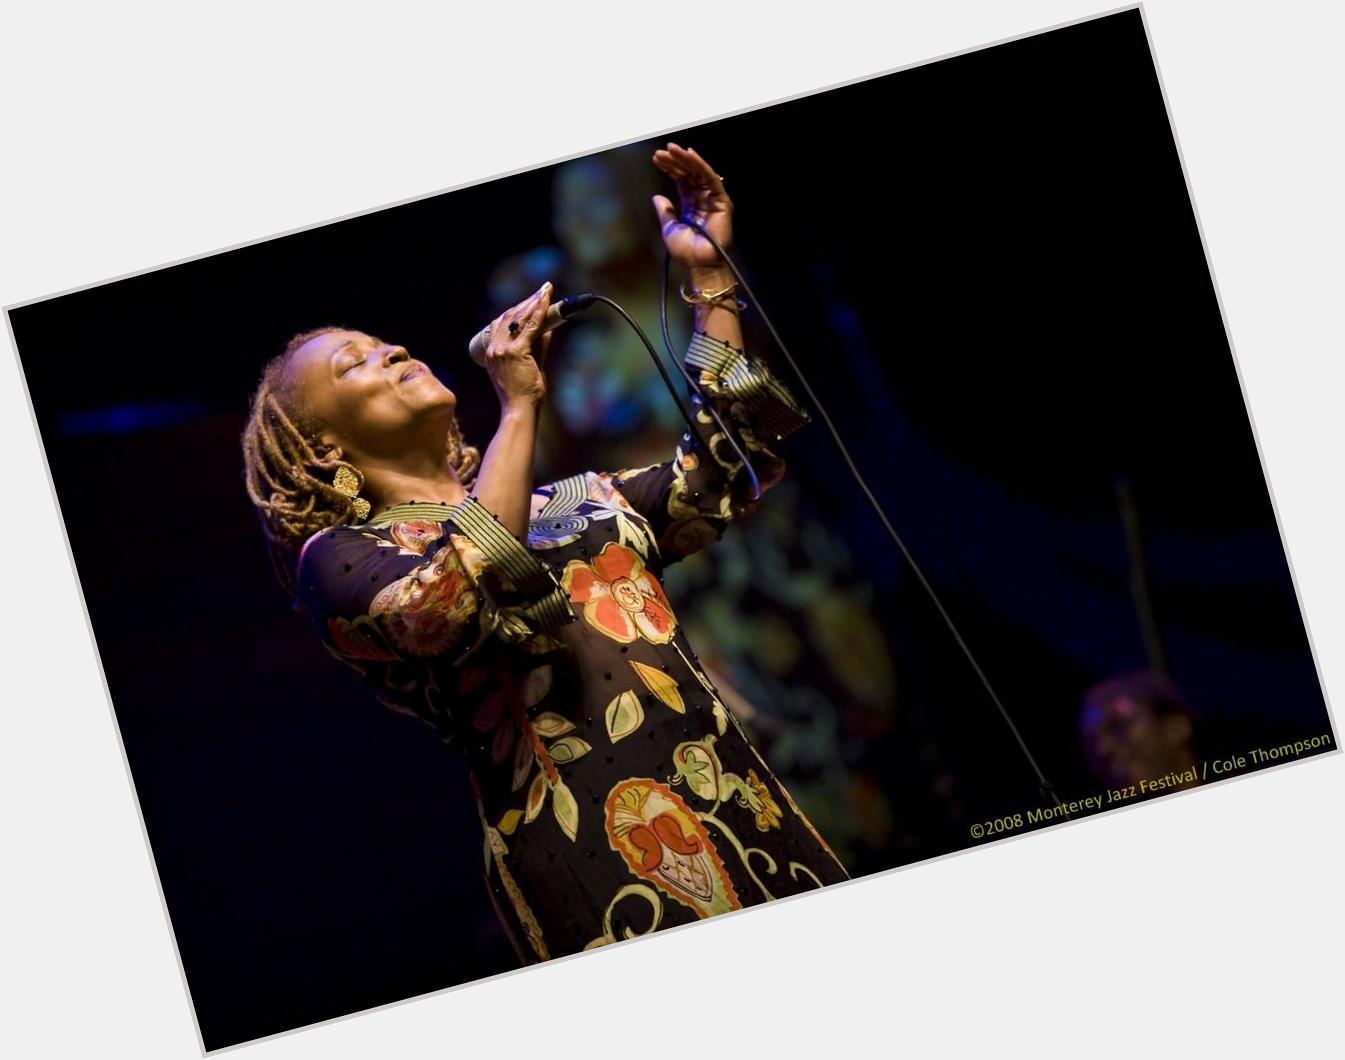 Happy Birthday today to grammy winner Cassandra Wilson Image: Monterey Jazz Festival 2008 